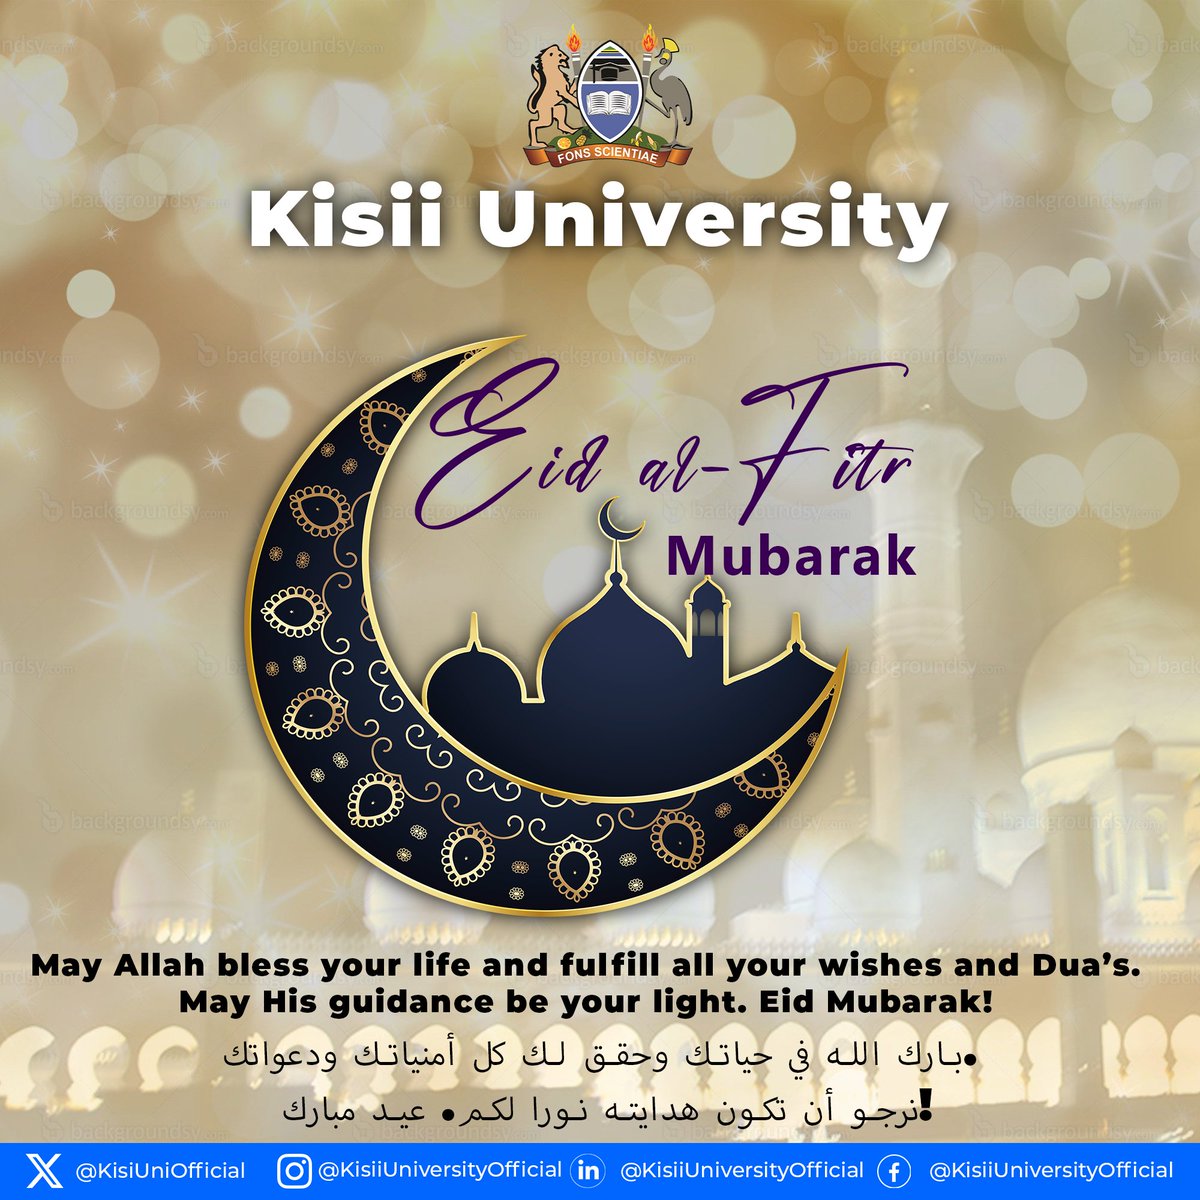 May this Eid bring you endless blessings, abundant joy, and everlasting peace. #KisiiUniversity